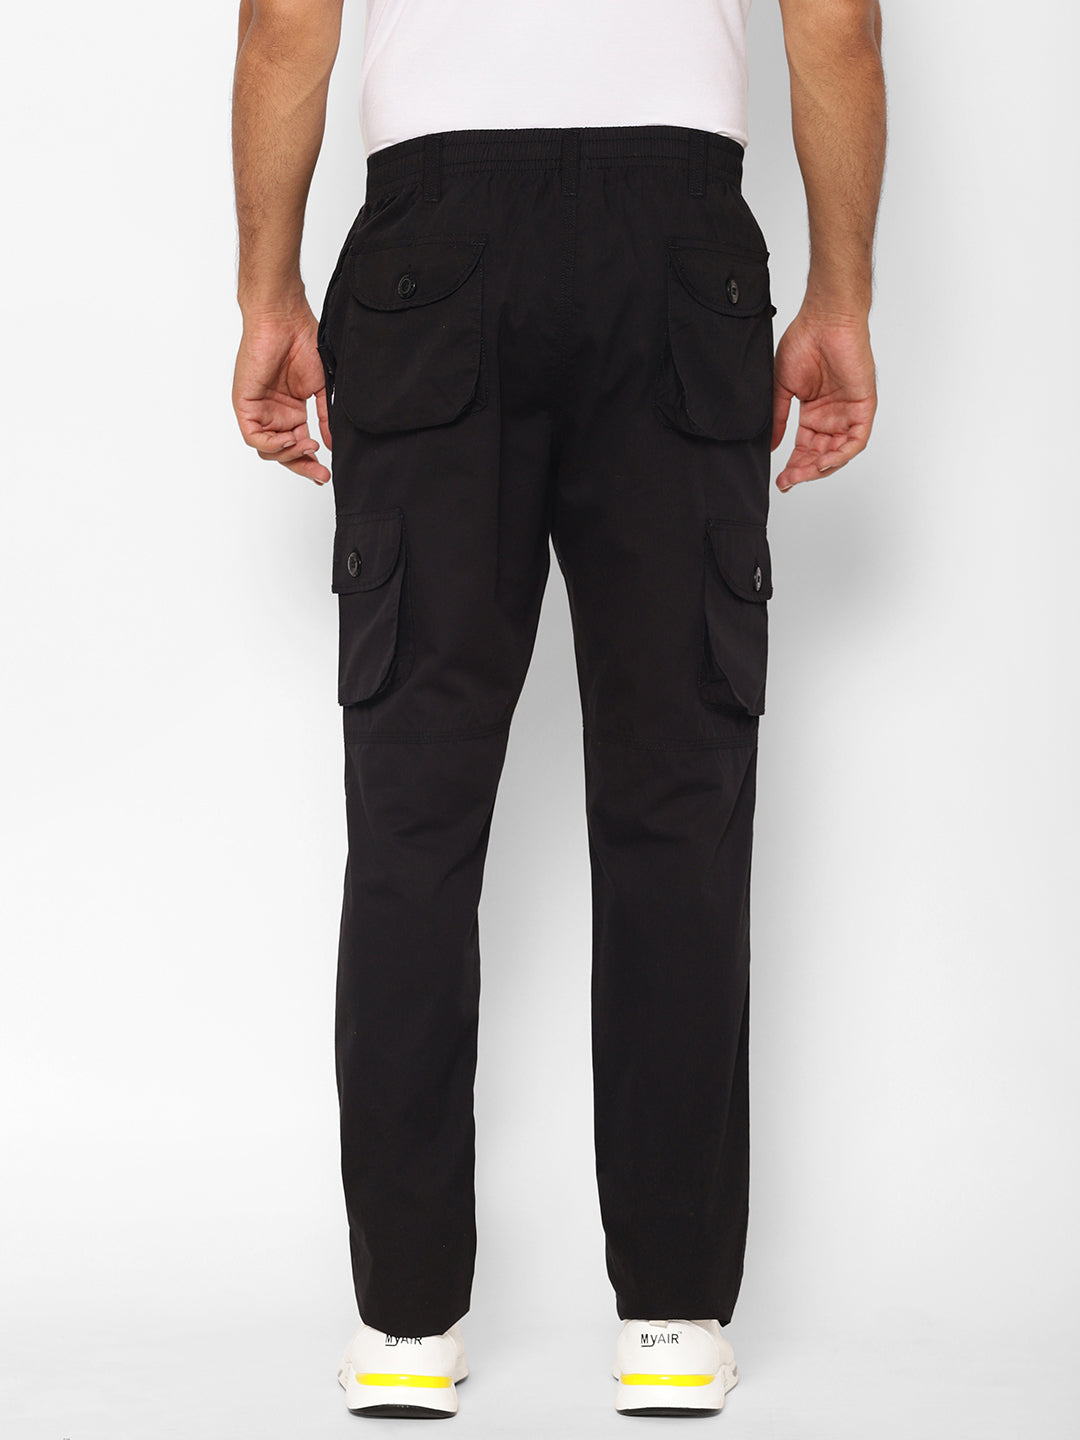 Signature Moleskin 6-Pocket Pant | Avedon & Colby International Outfitters